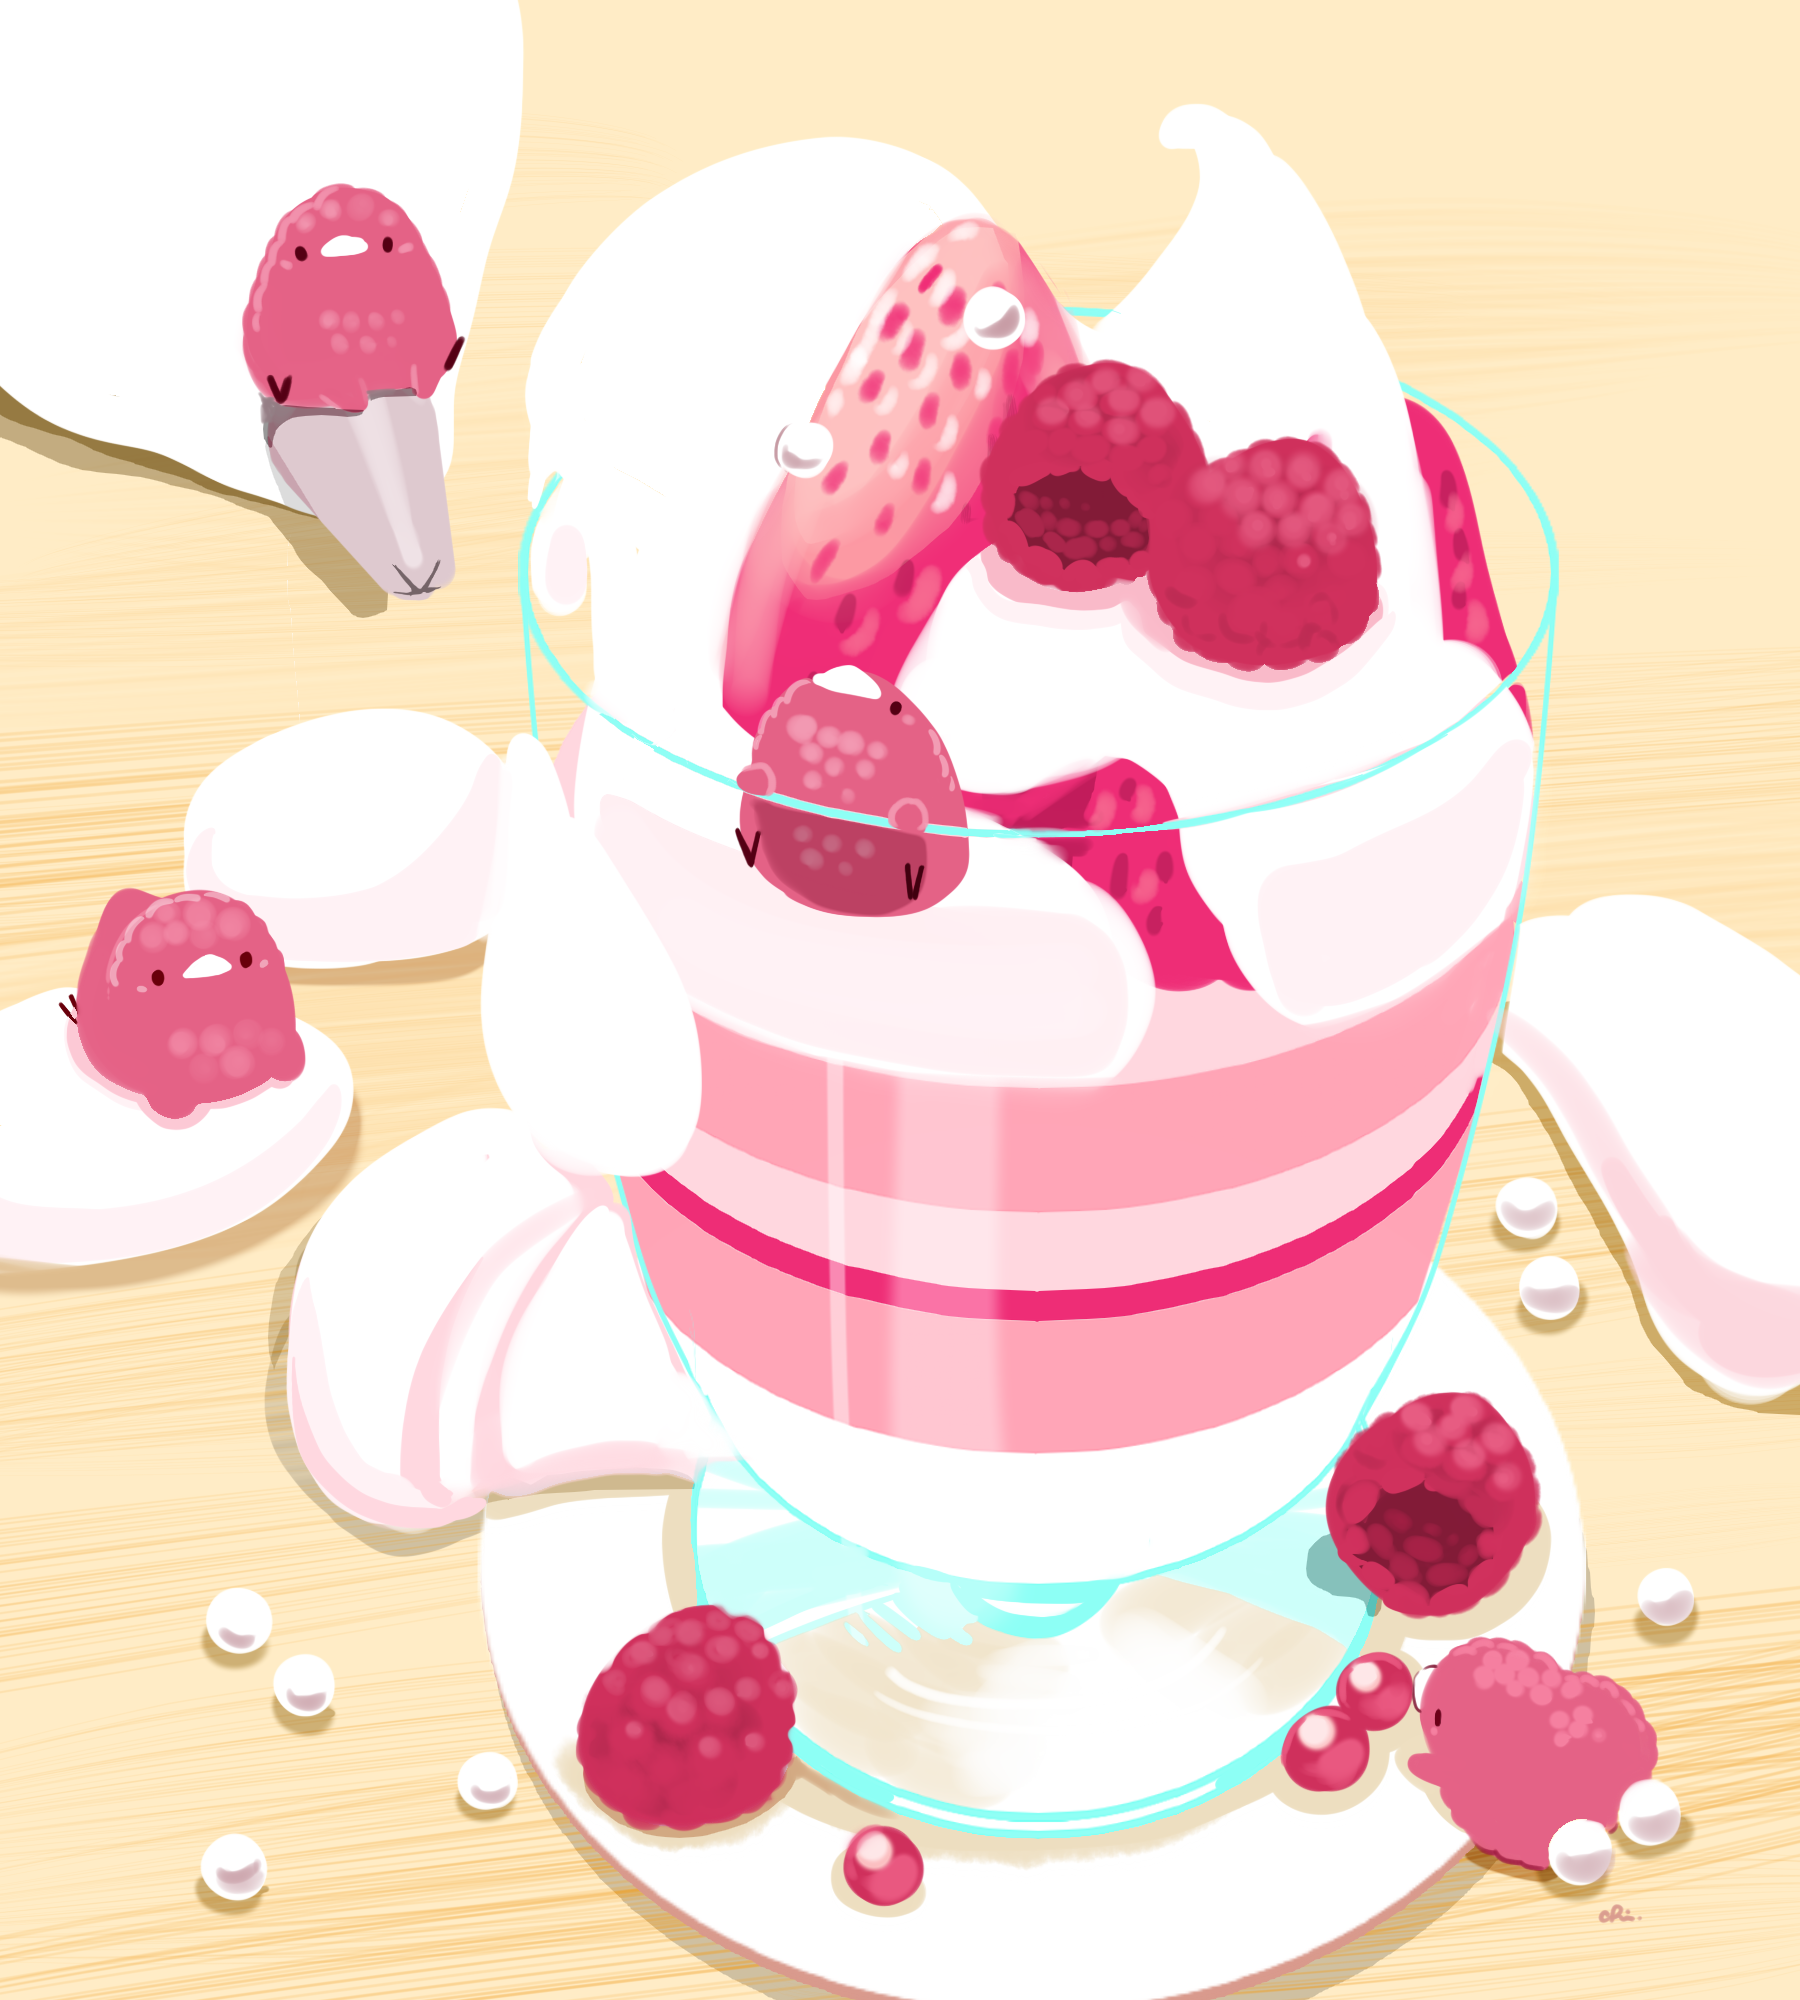 Original Characters Birds Raspberries Drawingchisanne Food Simple Background Digital Art Vertical 1800x2000